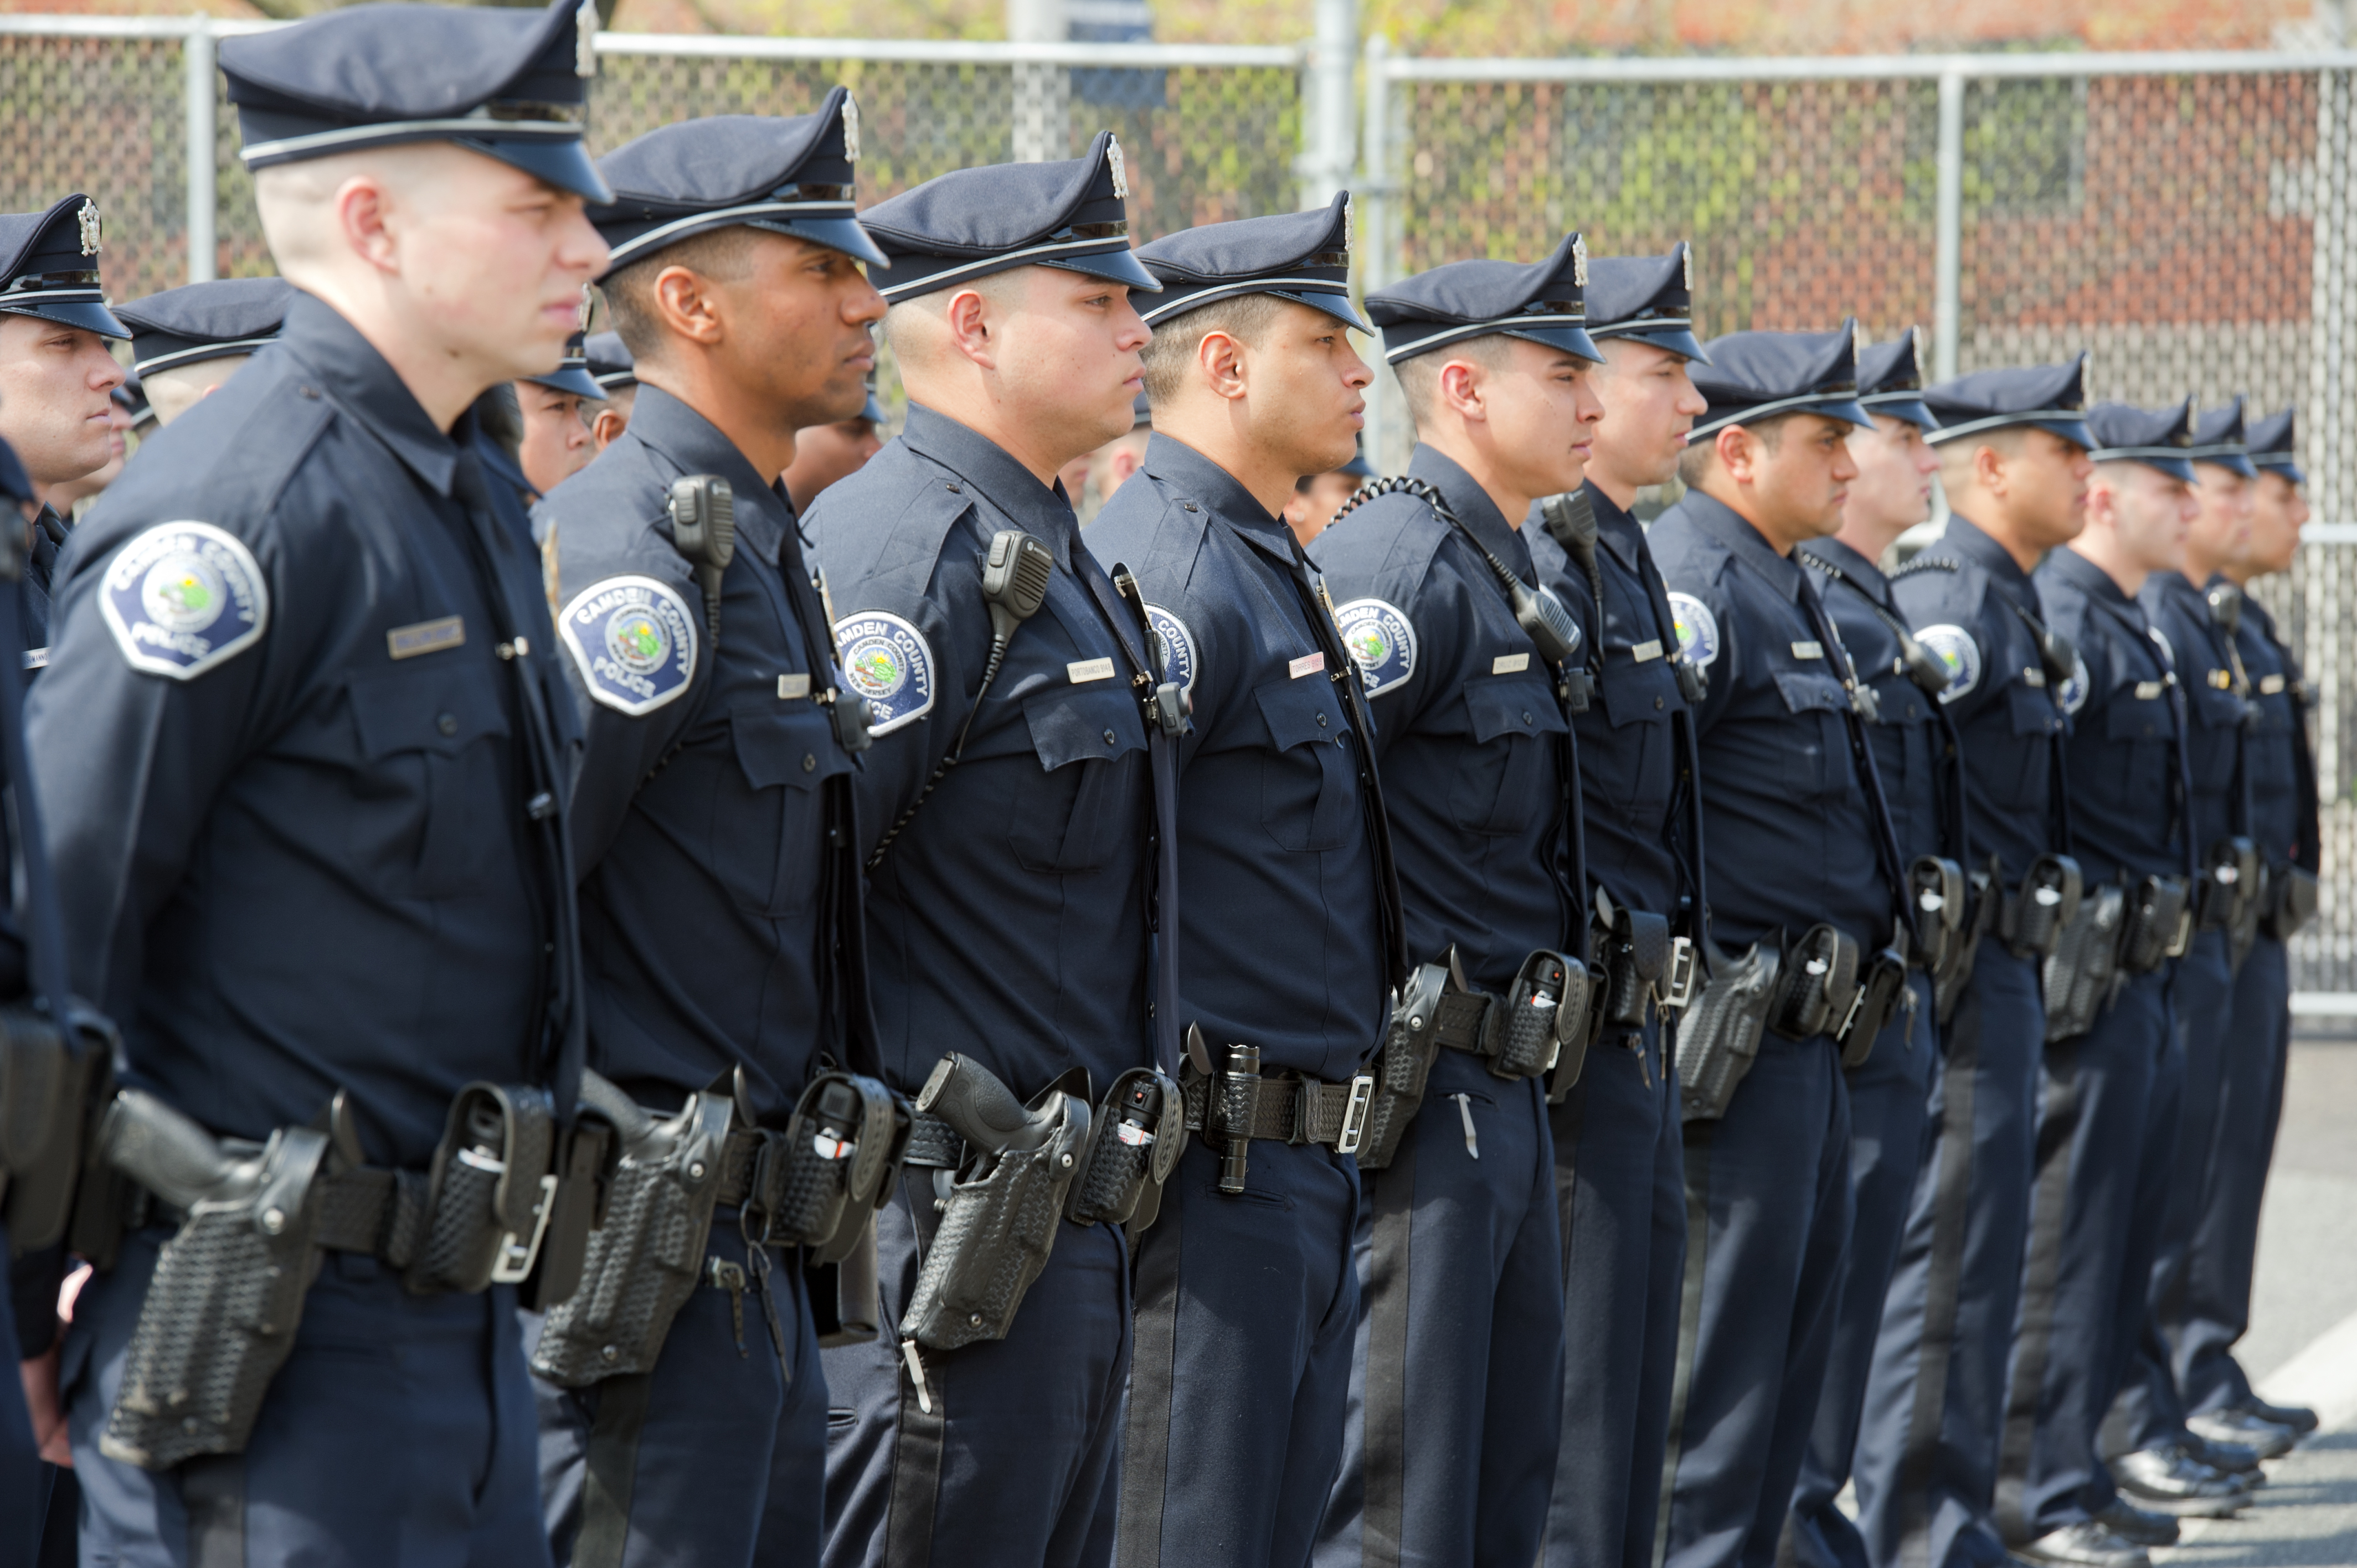 48 recruits Join the Camden County Police Department | Camden County, NJ